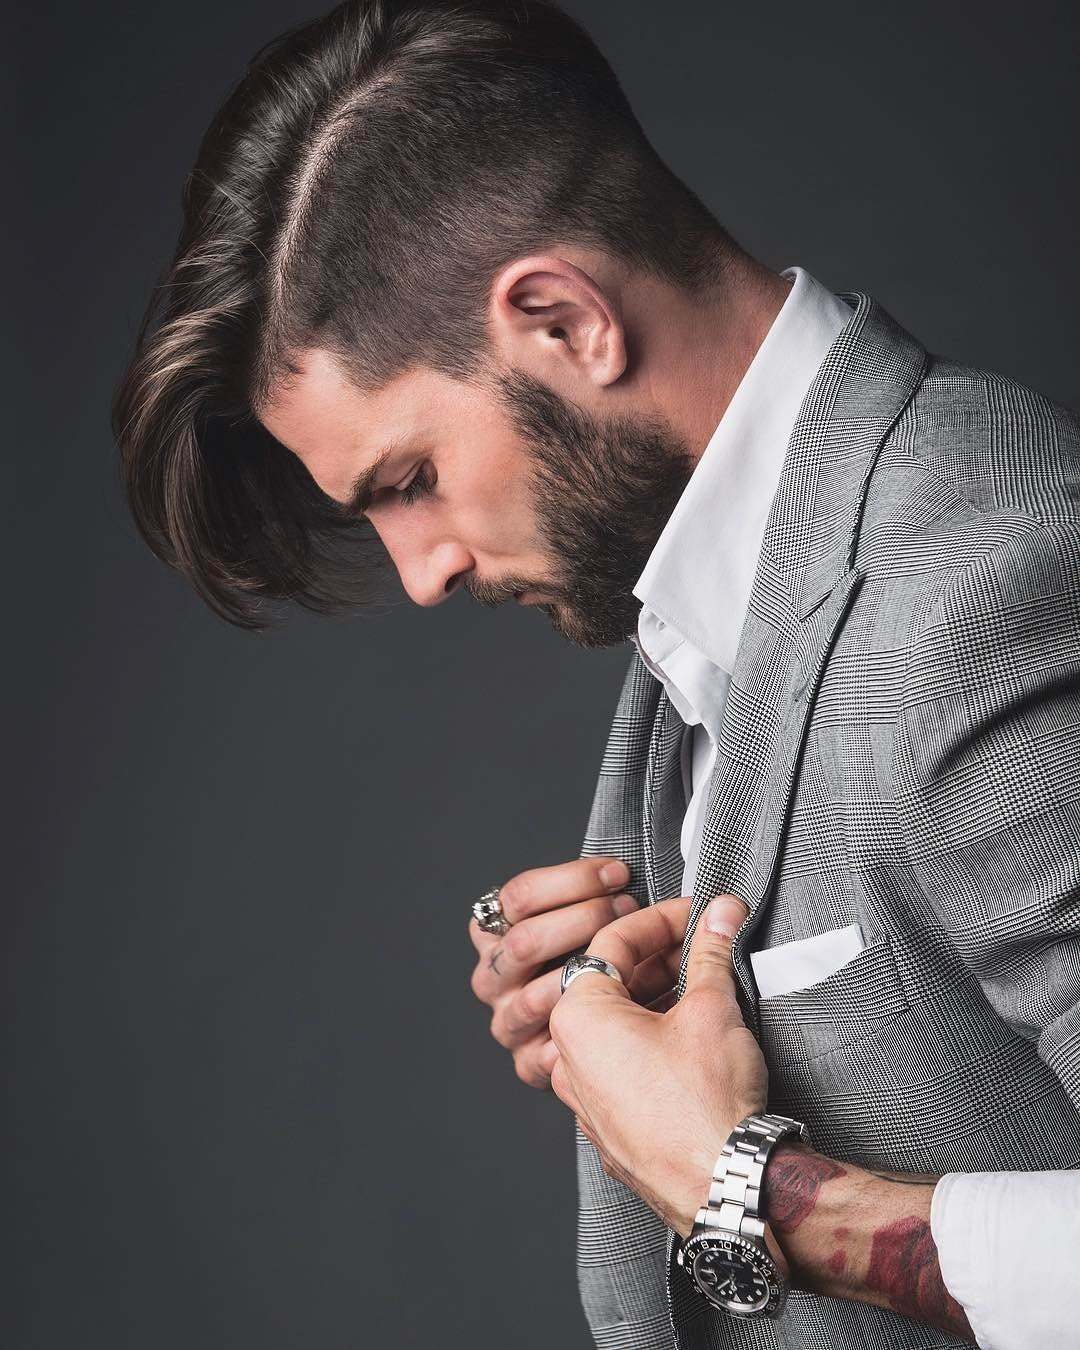 Best Stylish Haircut Ideas For Men 2019 38